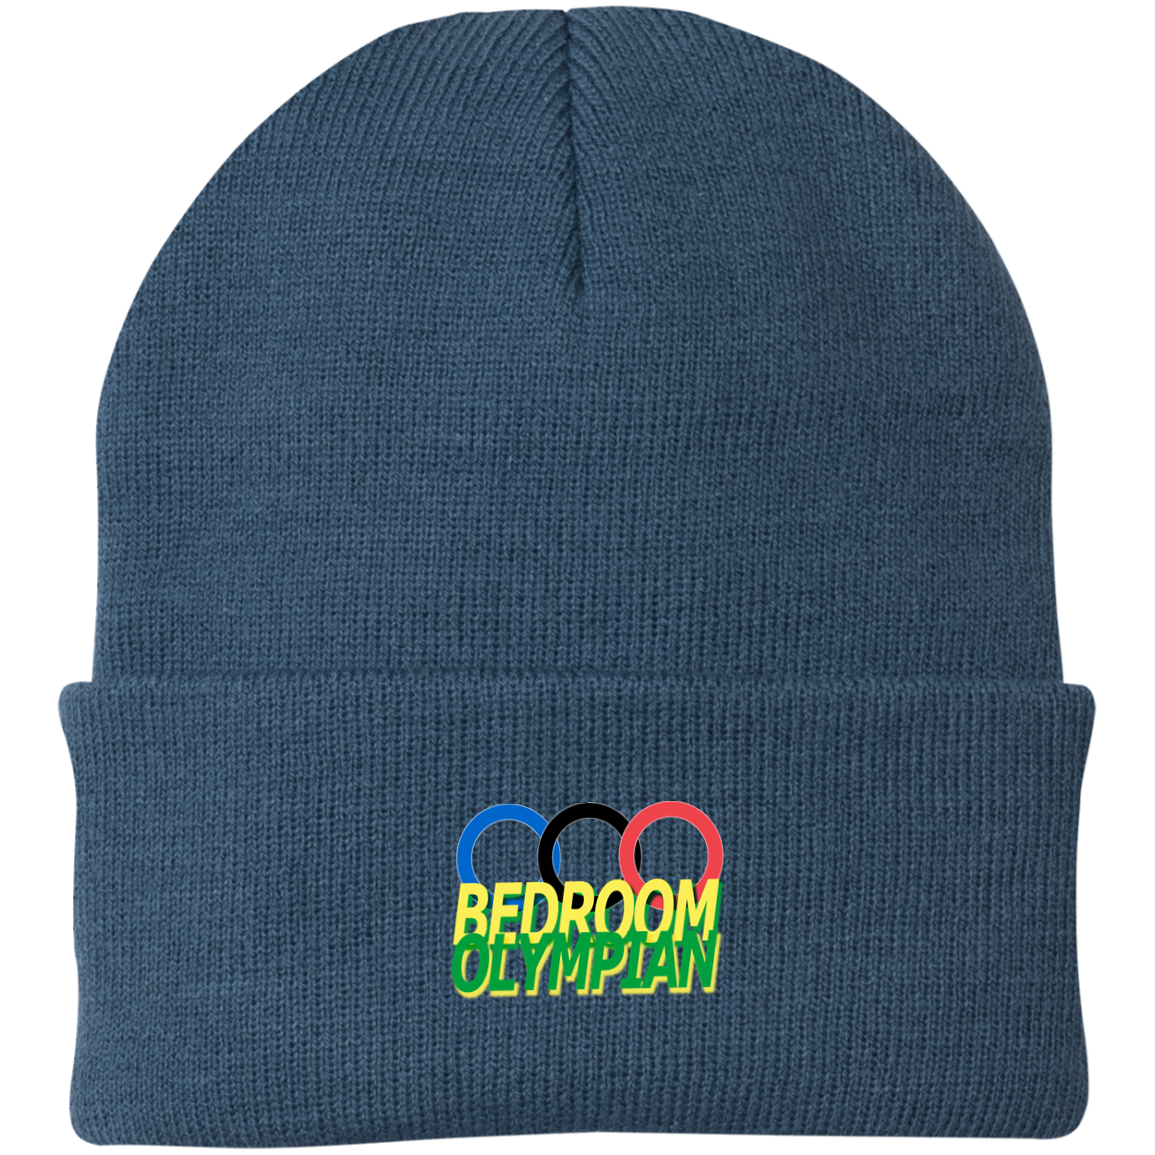 Bedroom Olympian Knit Cap